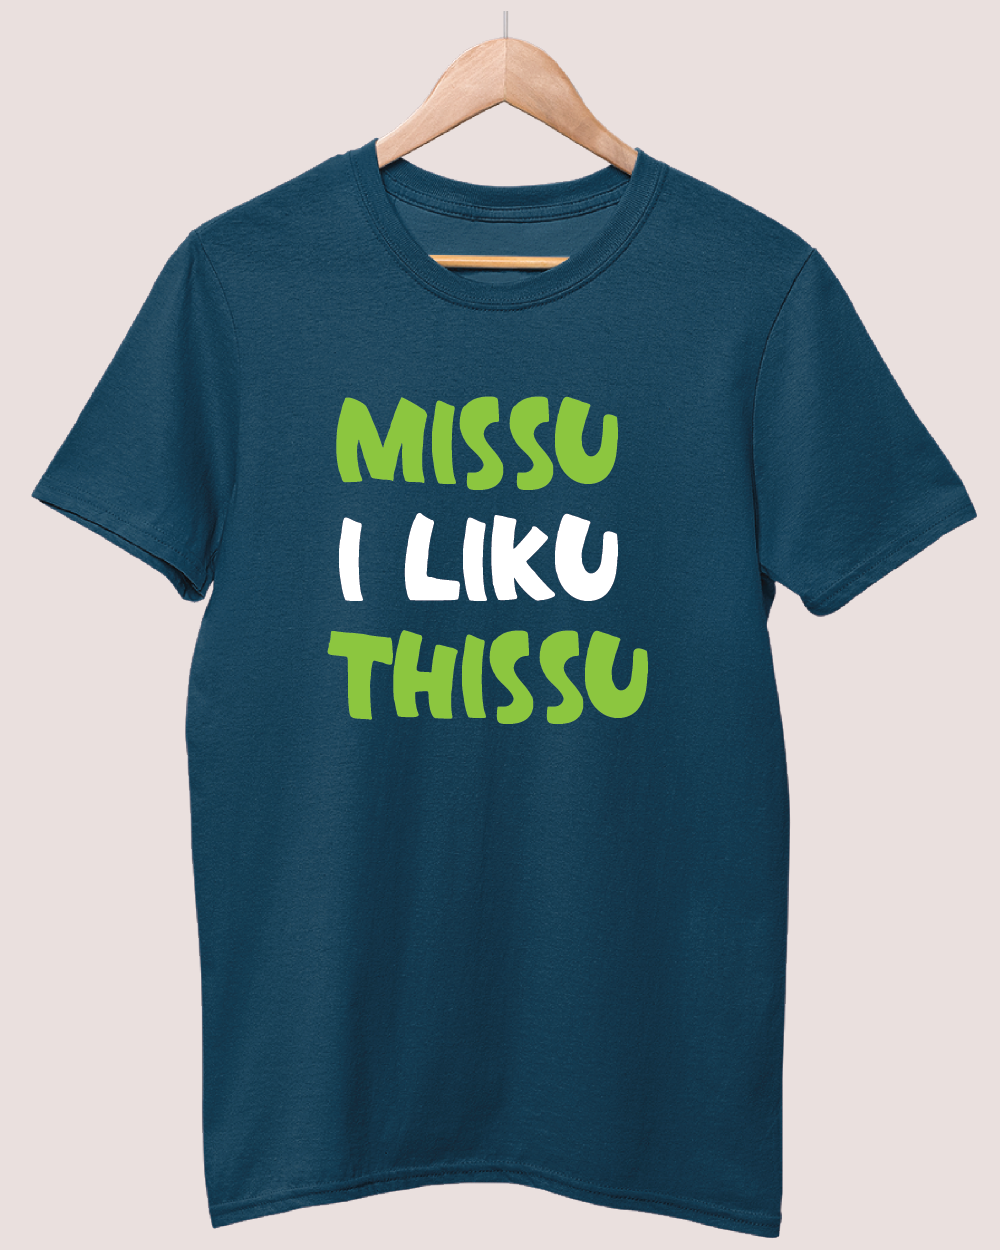 Missu I Like Thissu T-shirt